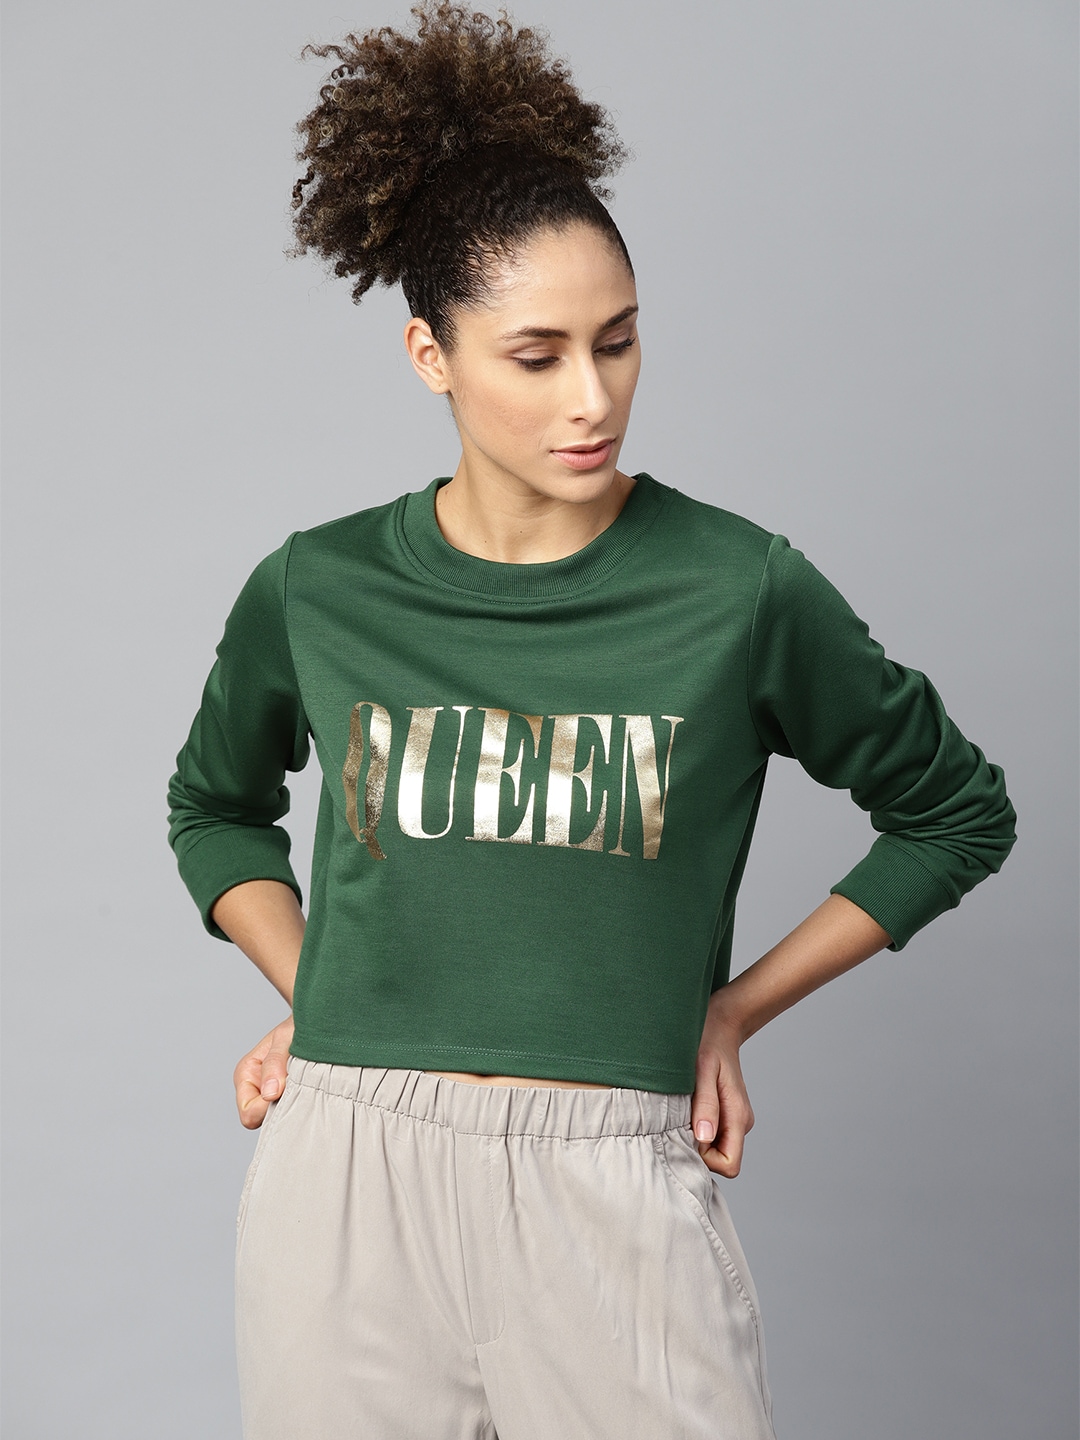 SASSAFRAS Women Olive Green & Golden Printed Sweatshirt Price in India